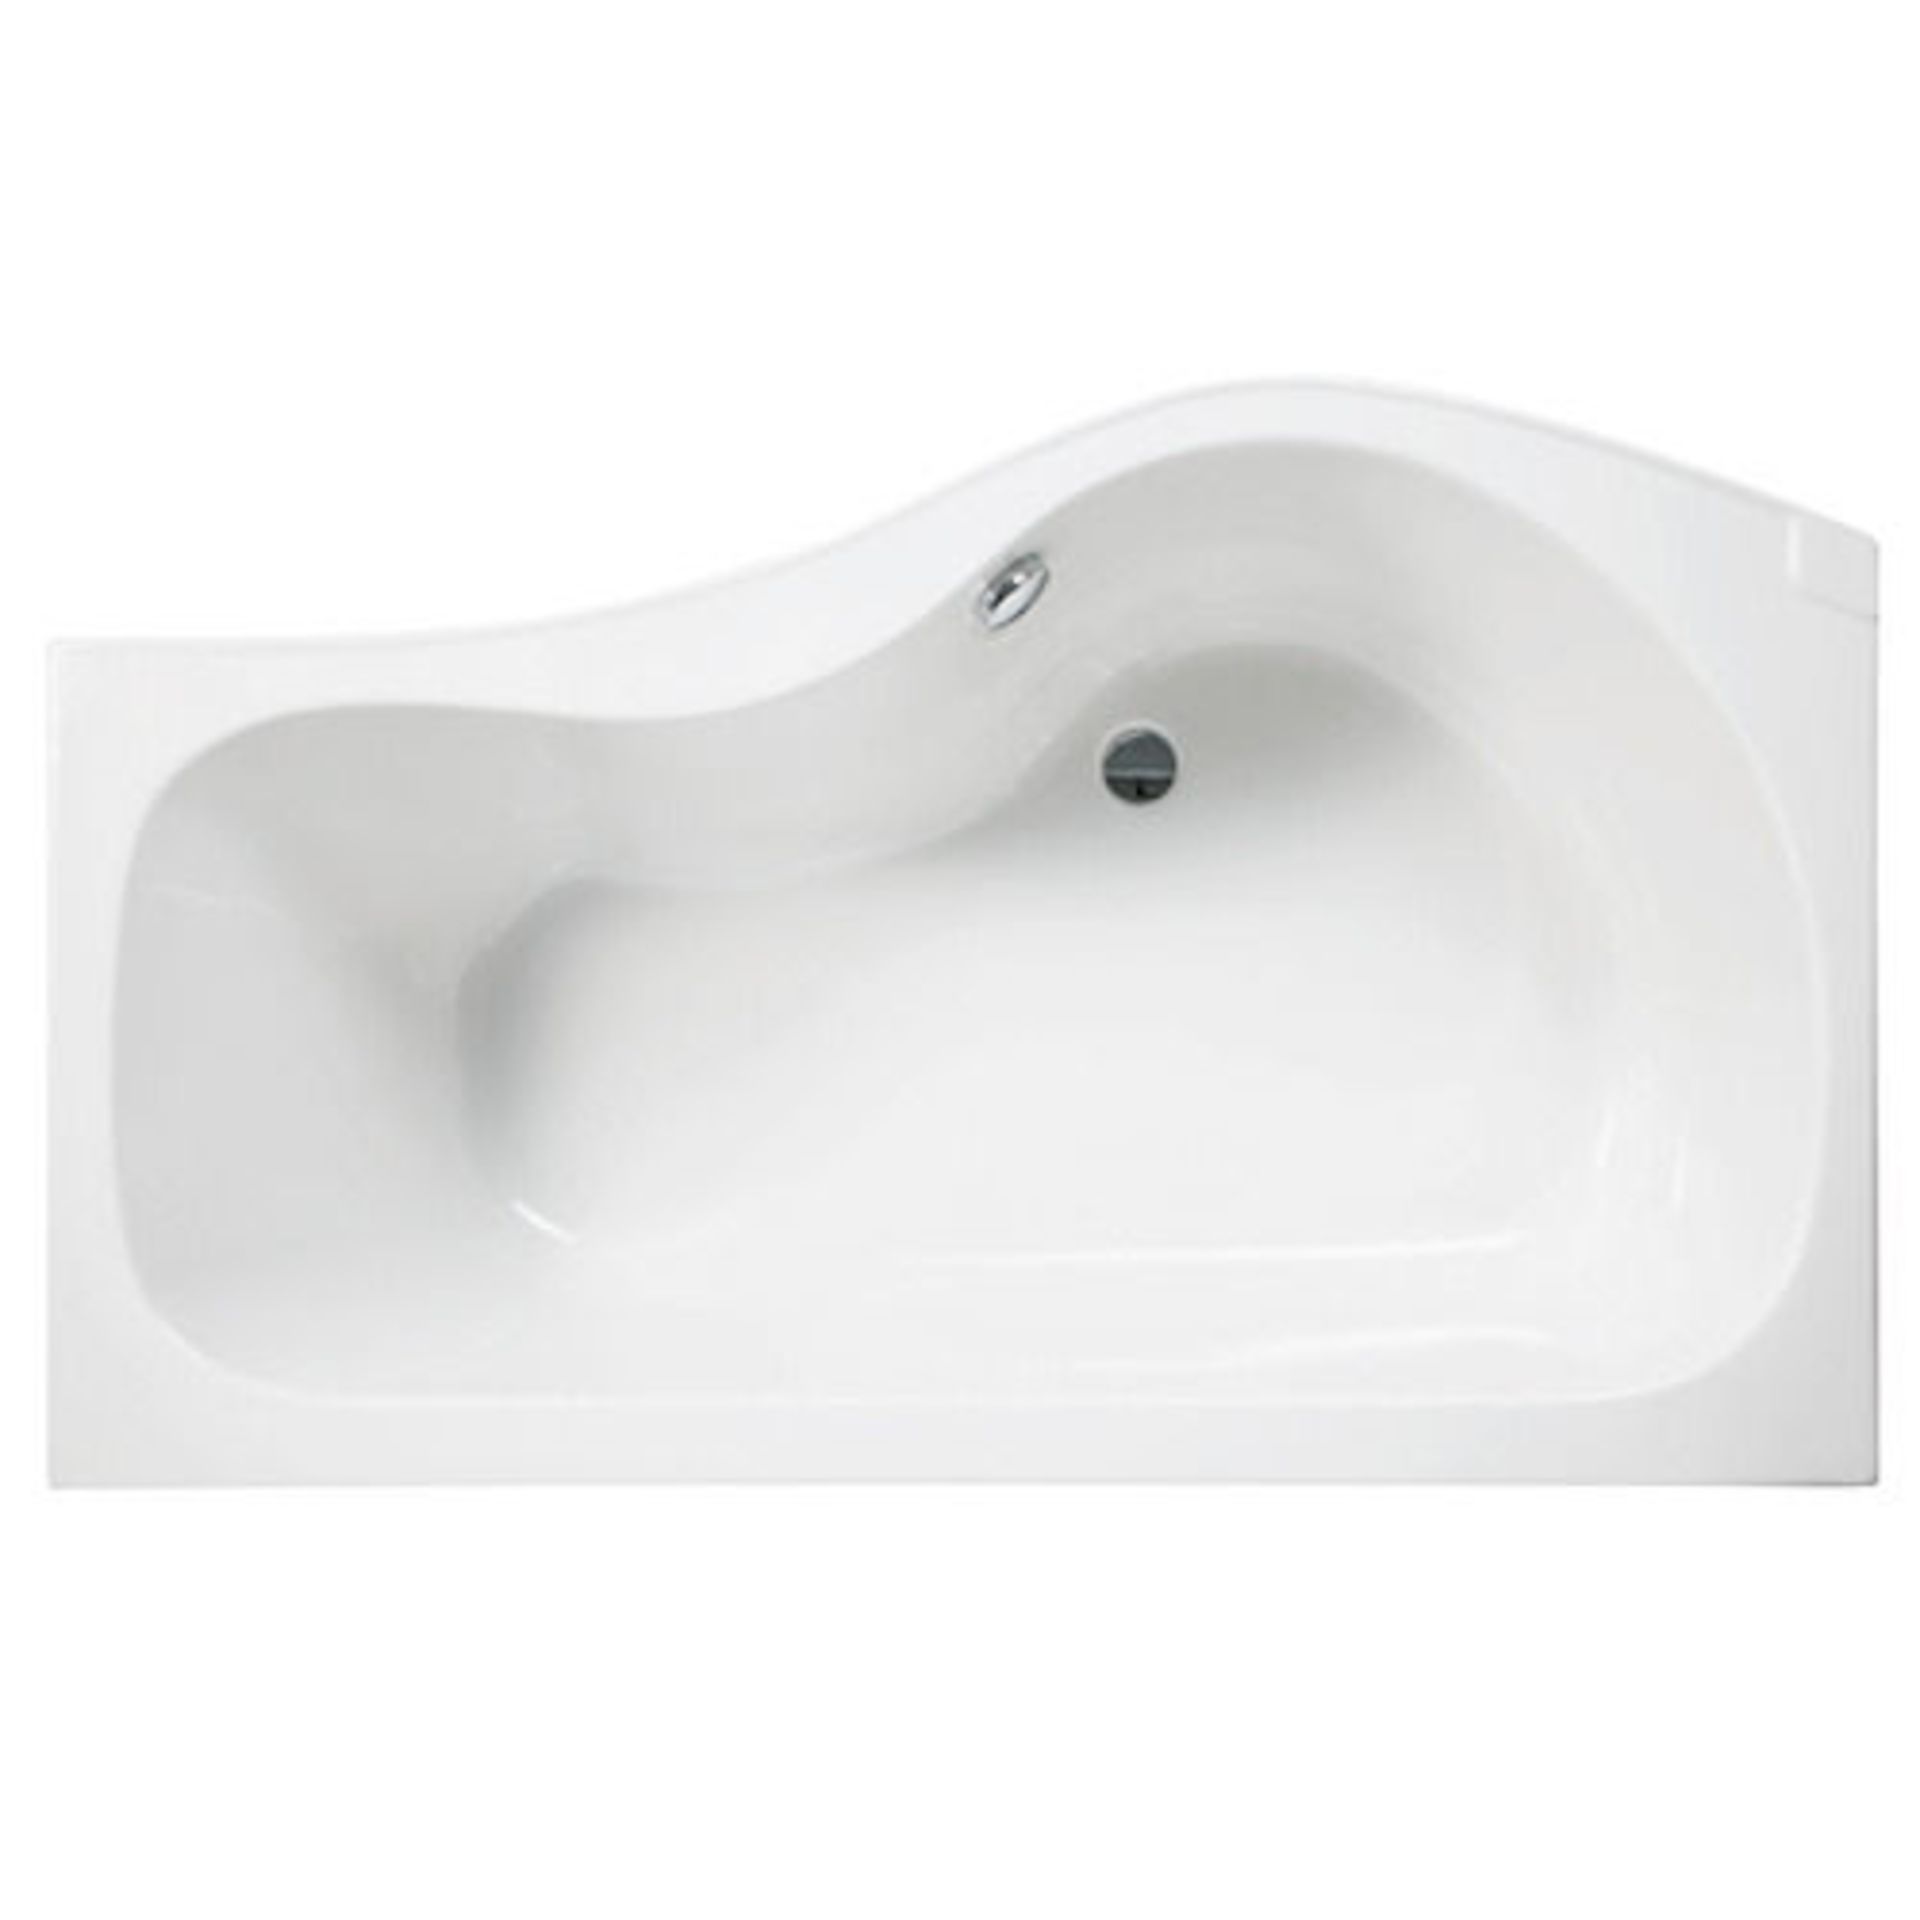 1500 LH P shaped showering bath - RRP £180